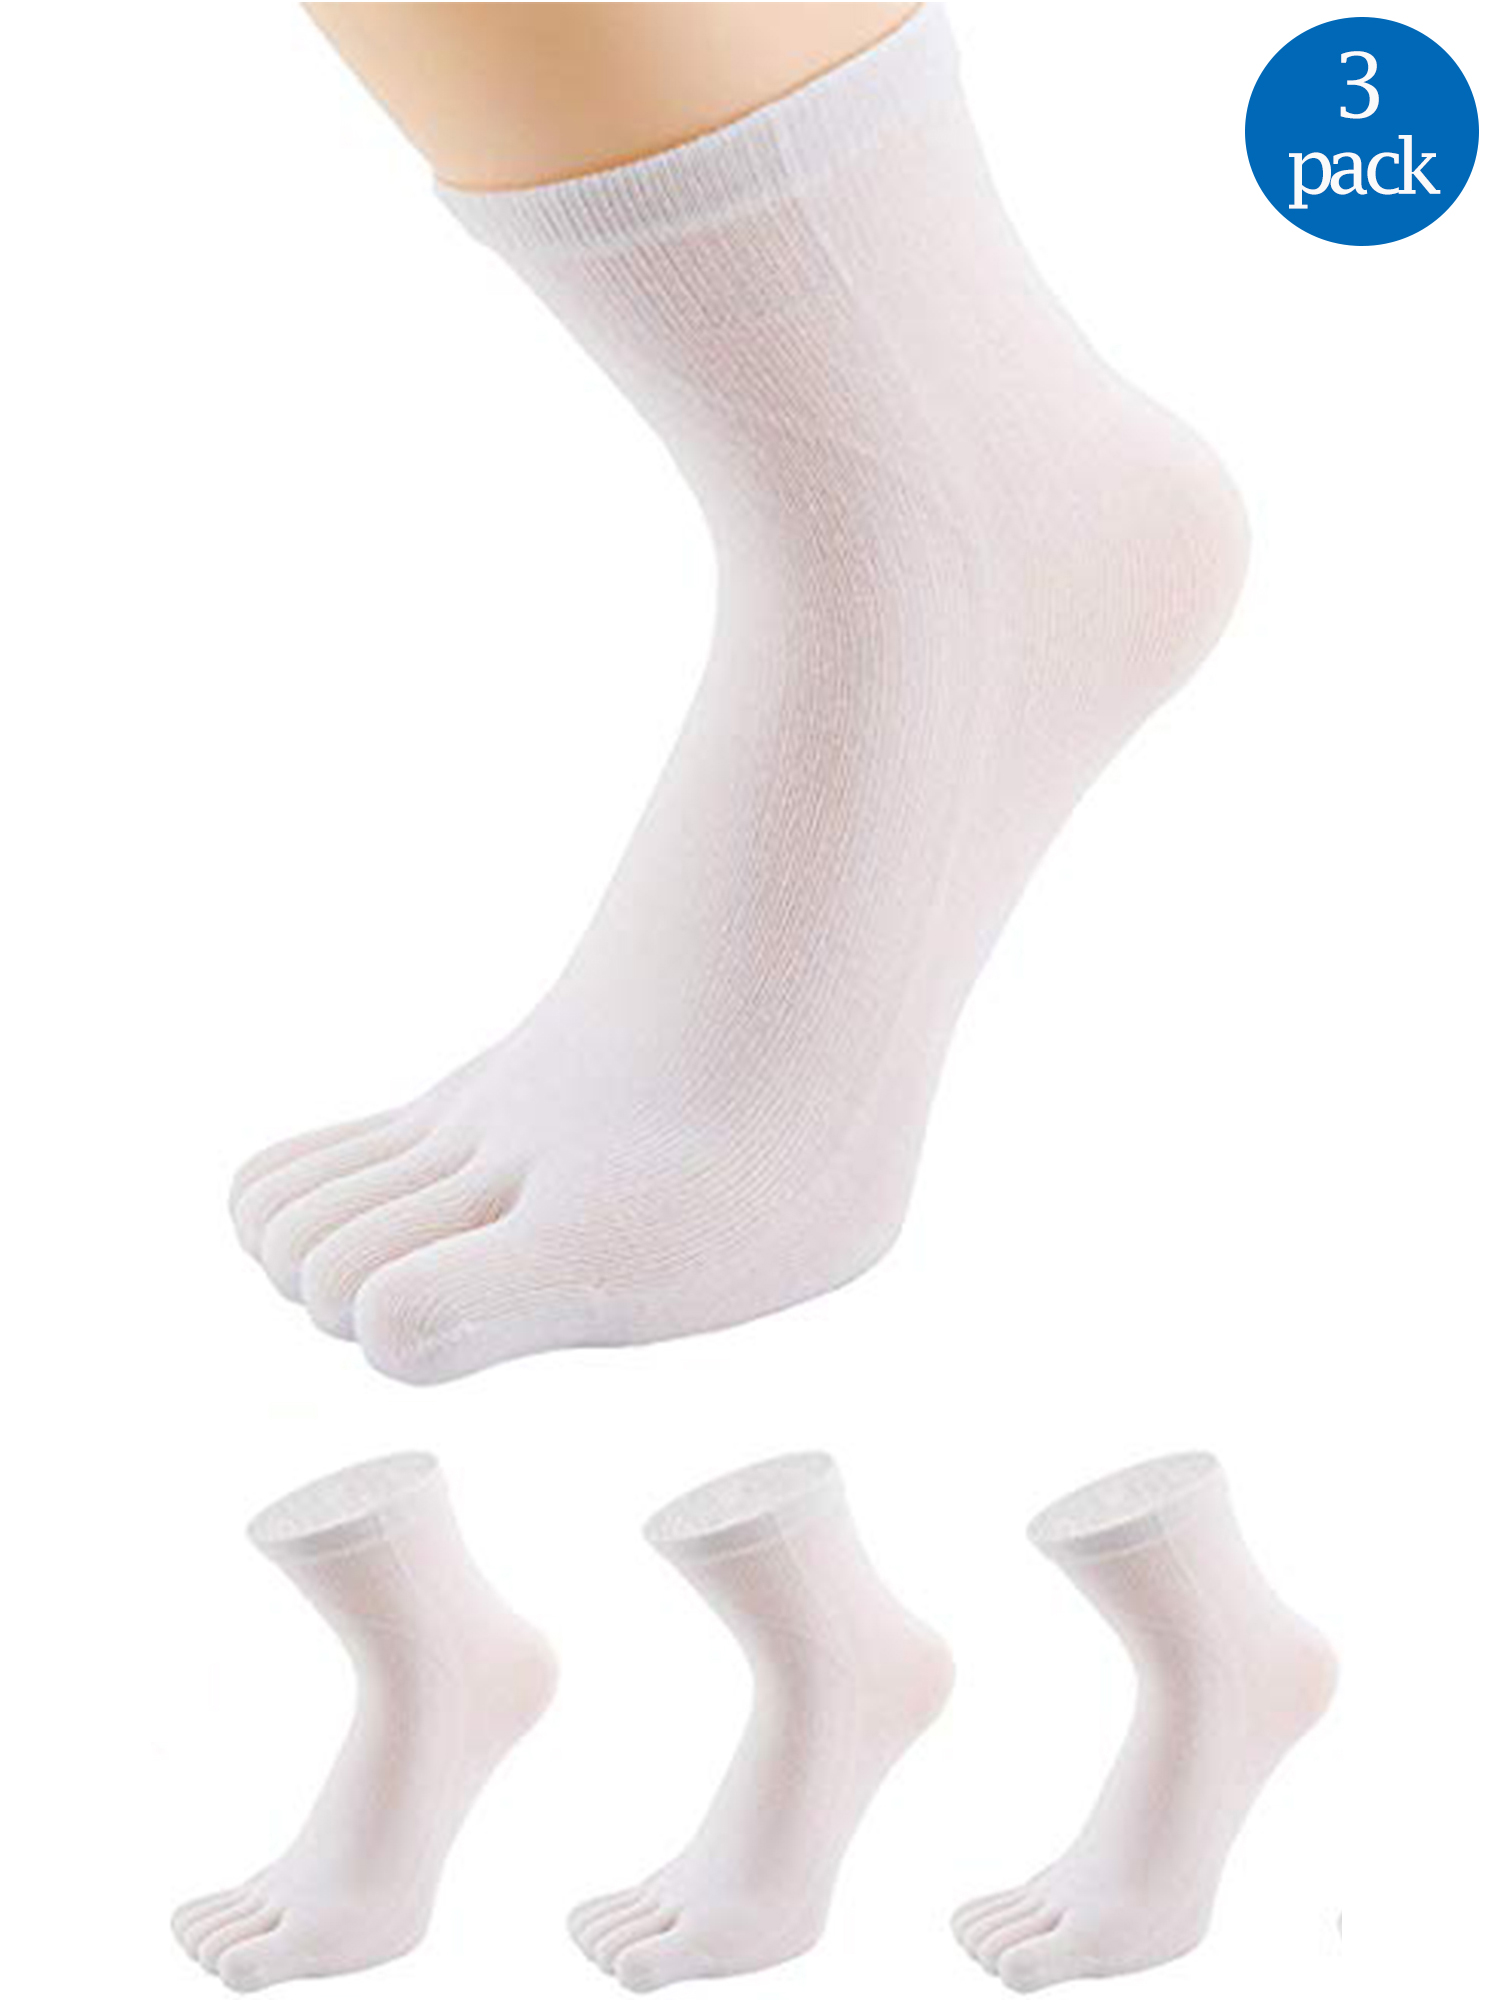 Men's Toe Socks 5 Finger Toe Flip Flop Socks Cotton 3 Pairs Casual Tabi Style Stylish Fun Premium Cotton Socks (3 Pack) - image 1 of 6